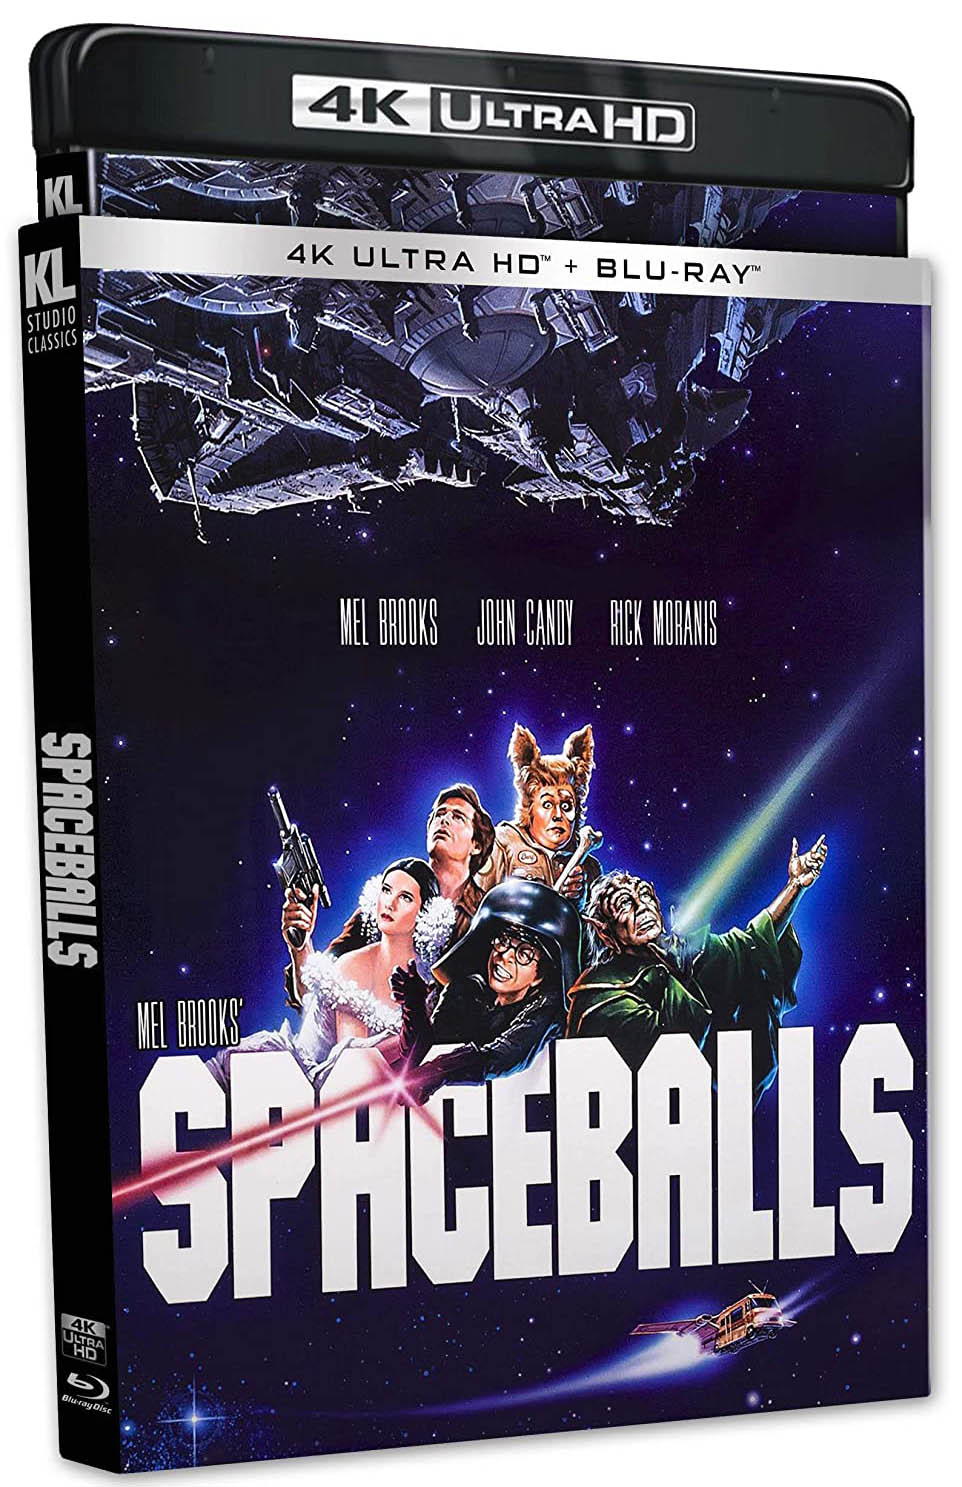 Spaceballs 4k Blu-ray angle